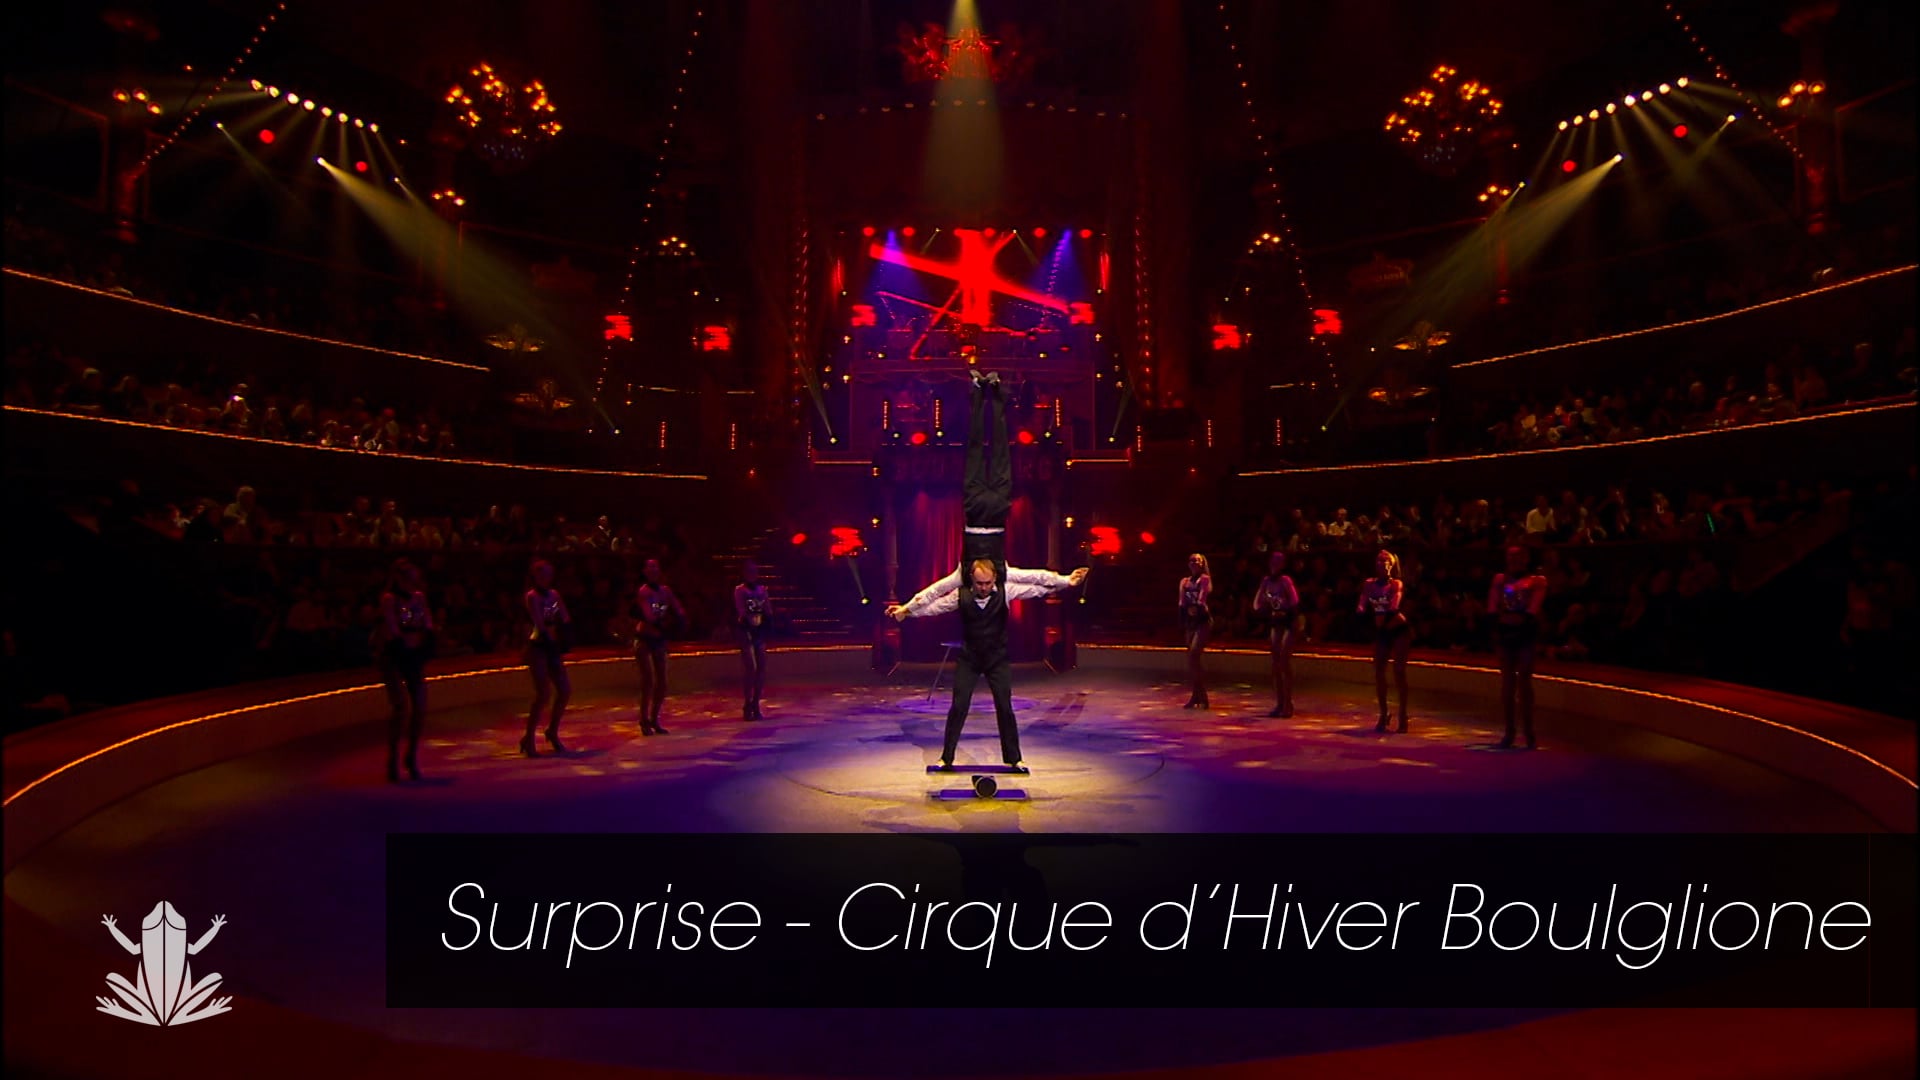 Surprise – Cirque d’Hiver Bouglione